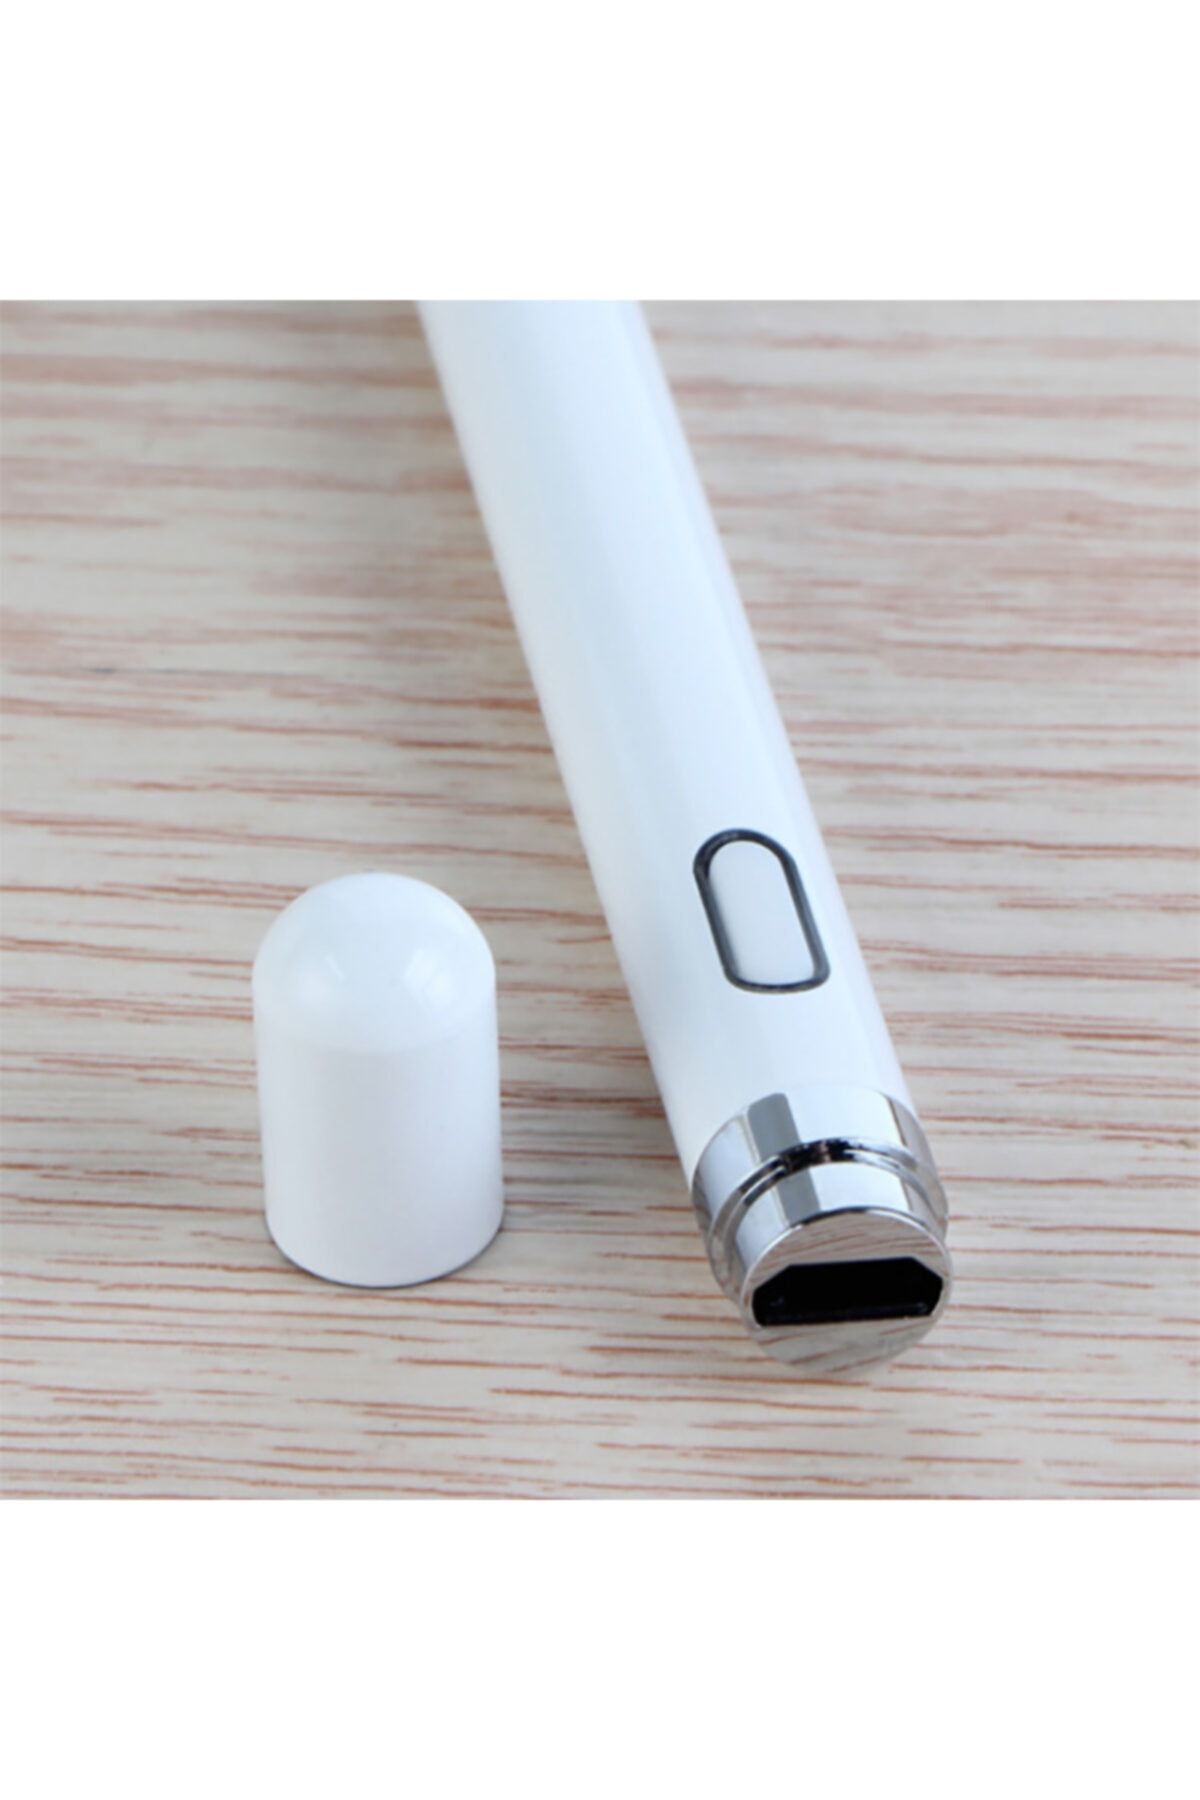 Ally Mobile Ally Pencil K818  Ios Android Için Kapasif Kalem-beyaz